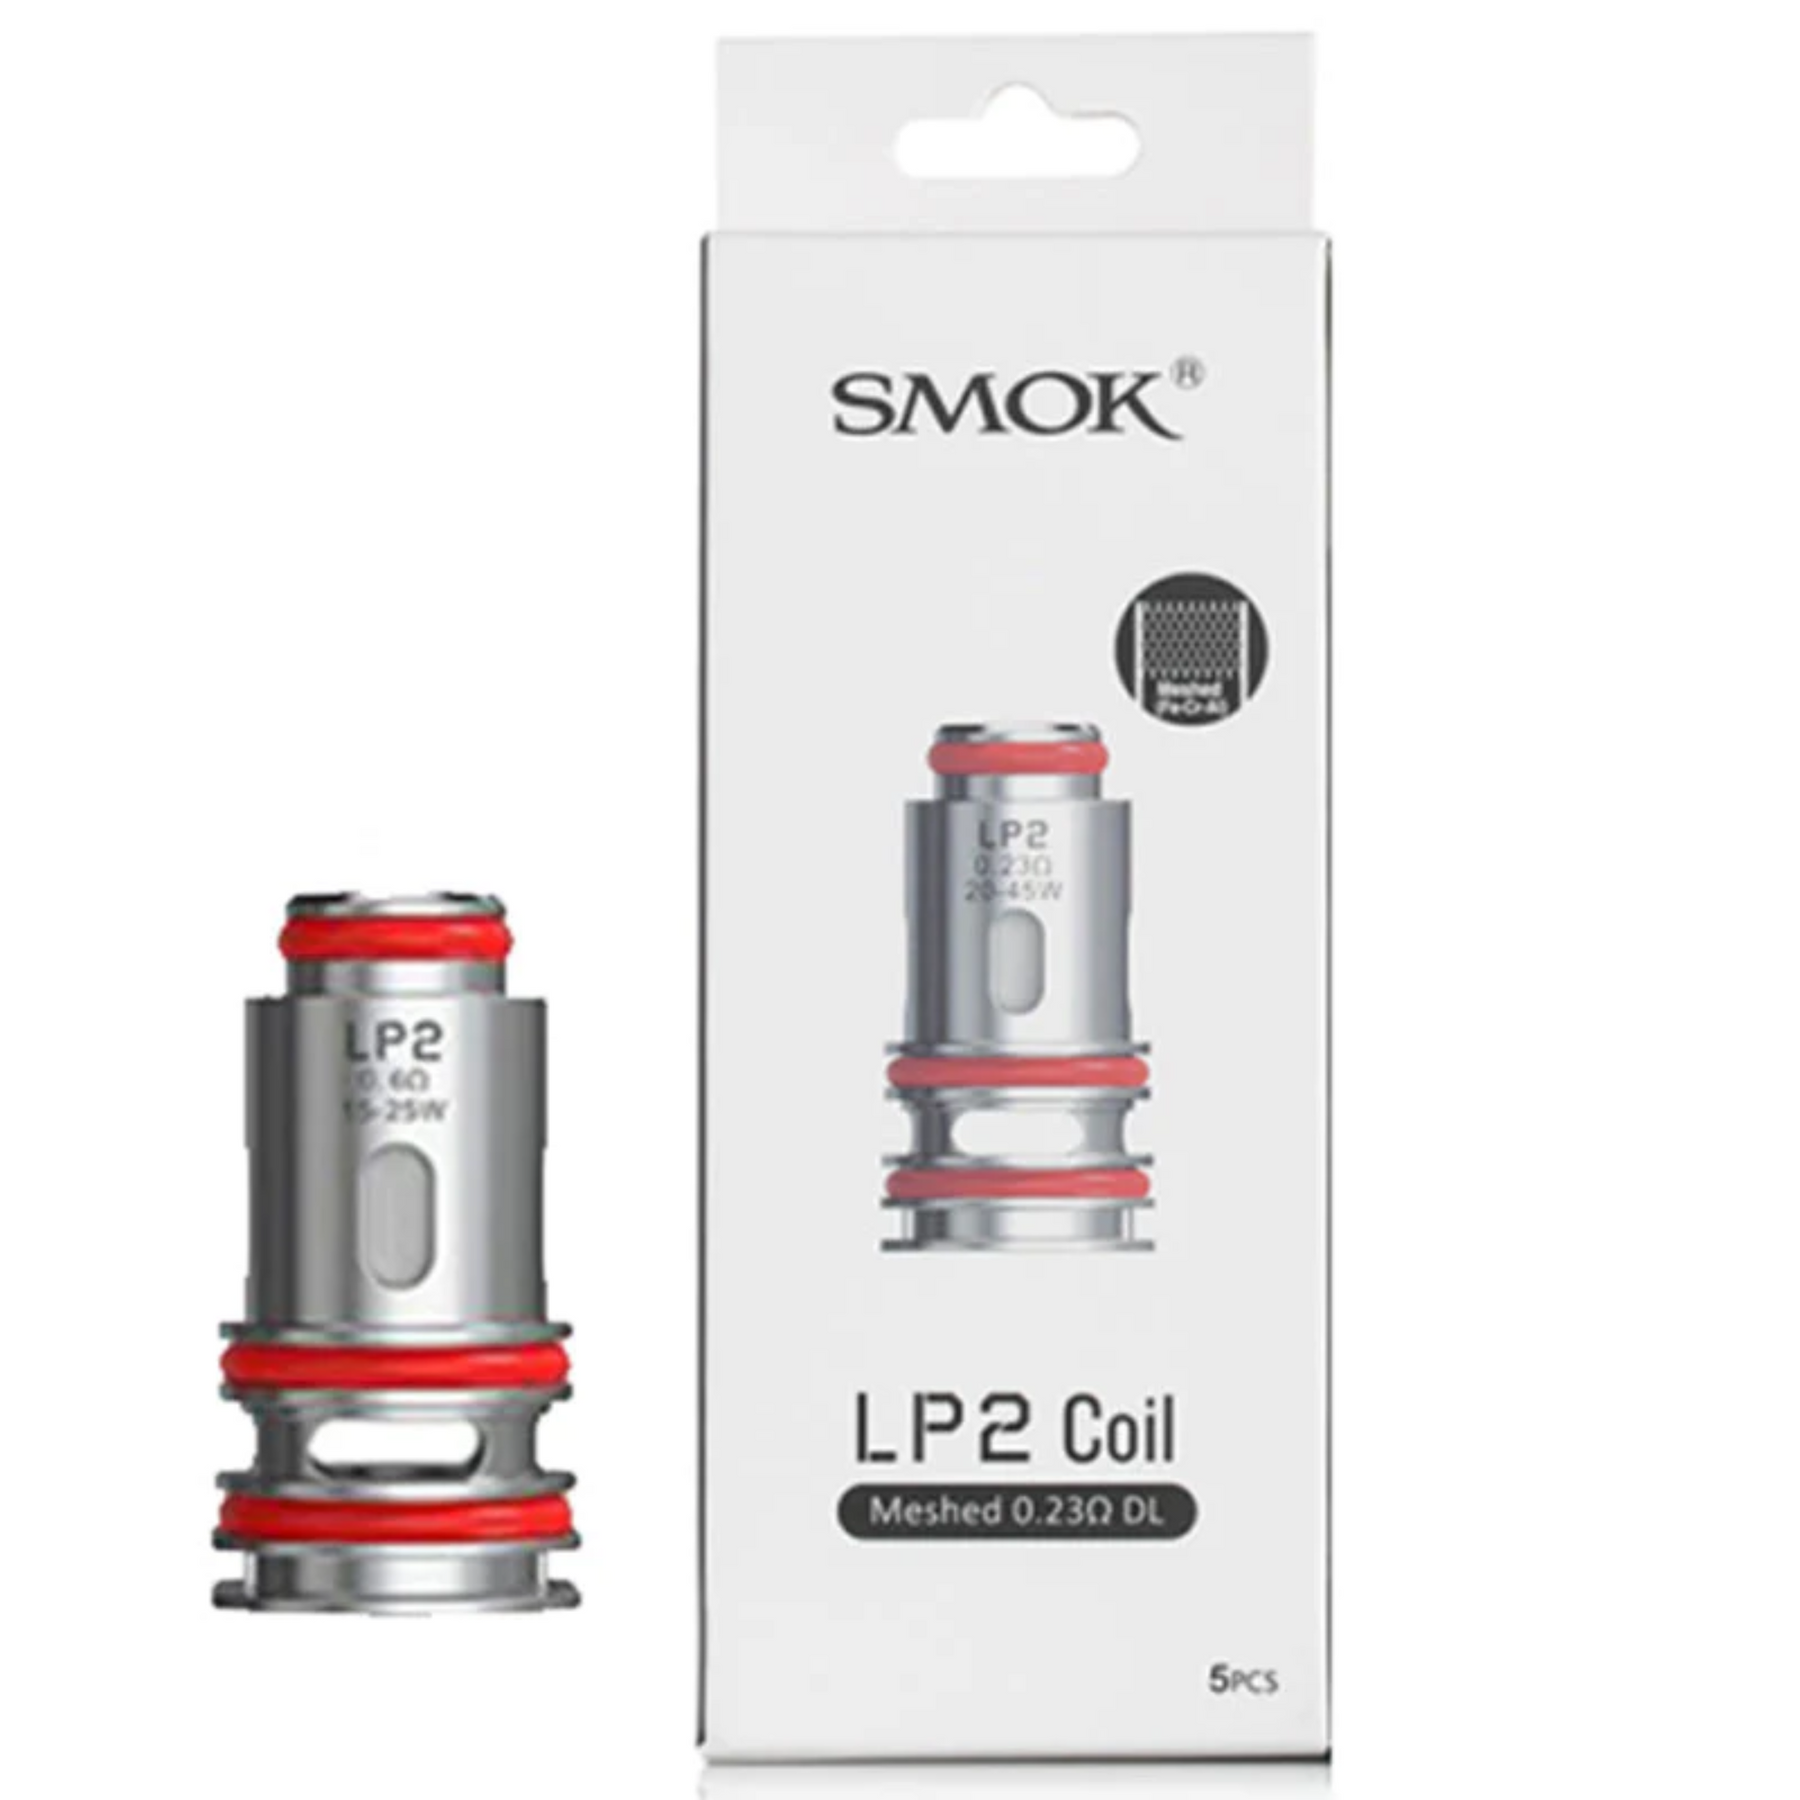 Smok LP2 DL Mesh coil